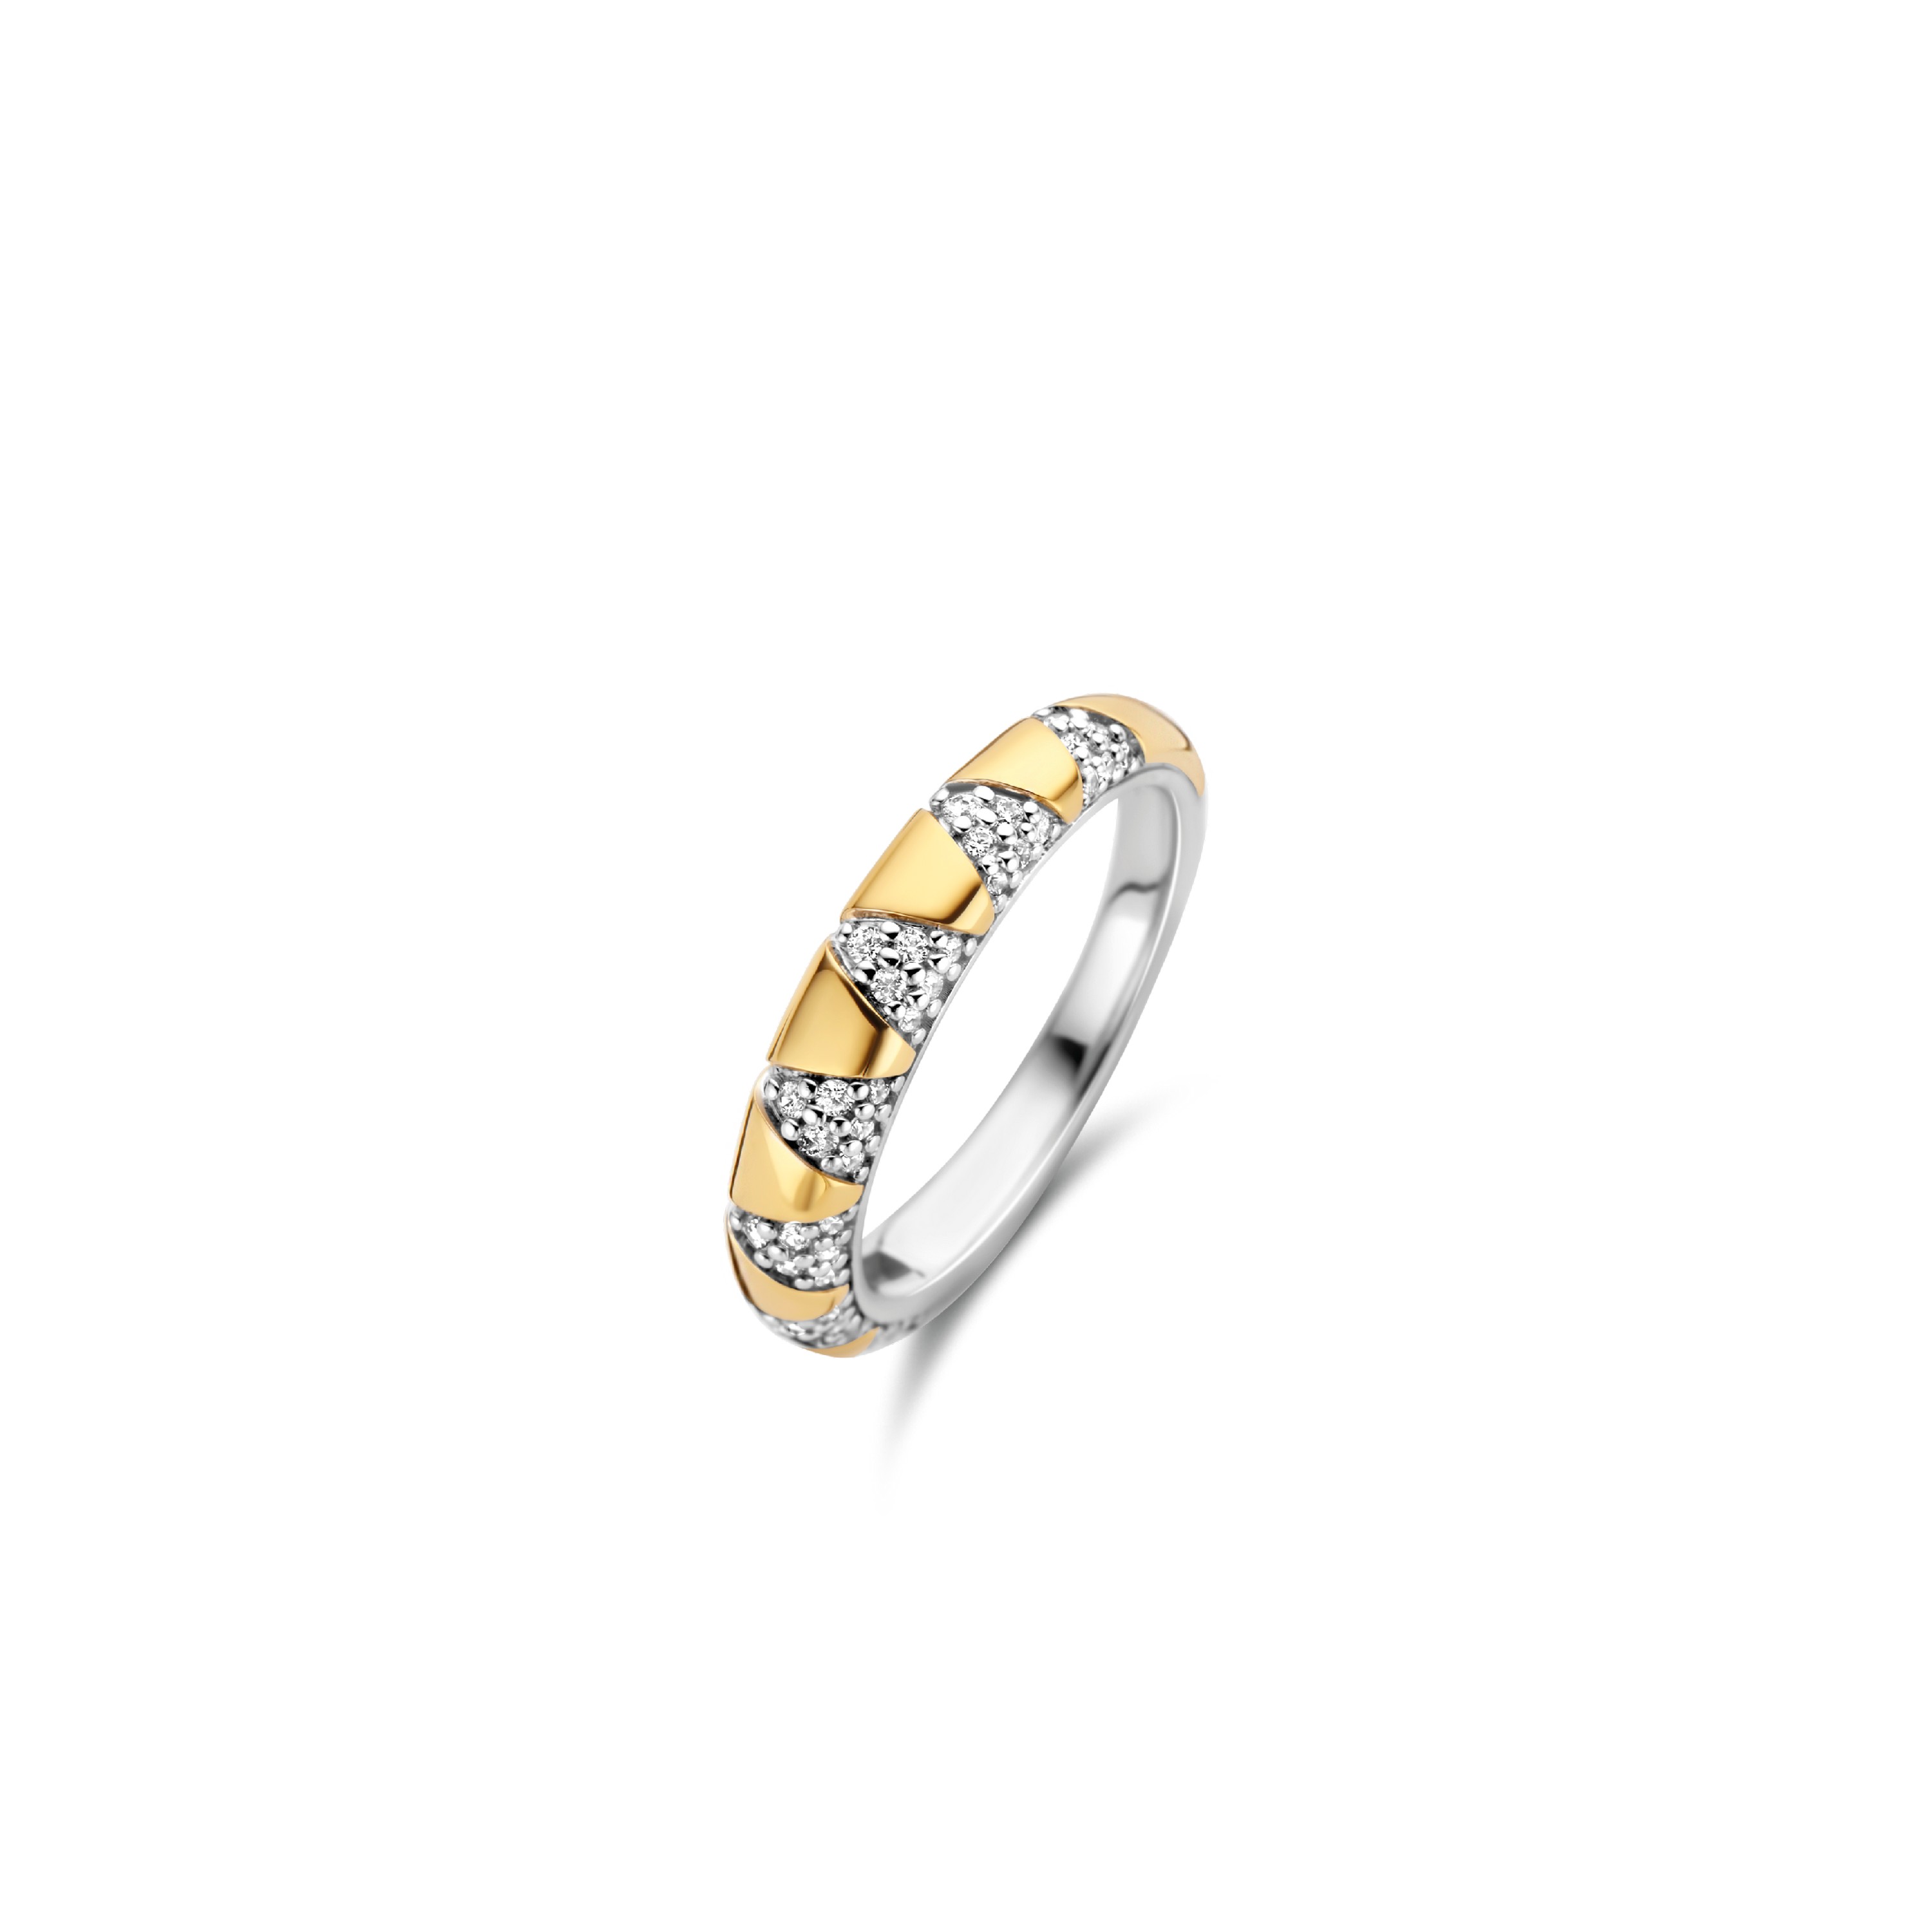 TI SENTO - Milano Ring 12216ZY Gala Jewelers Inc. White Oak, PA